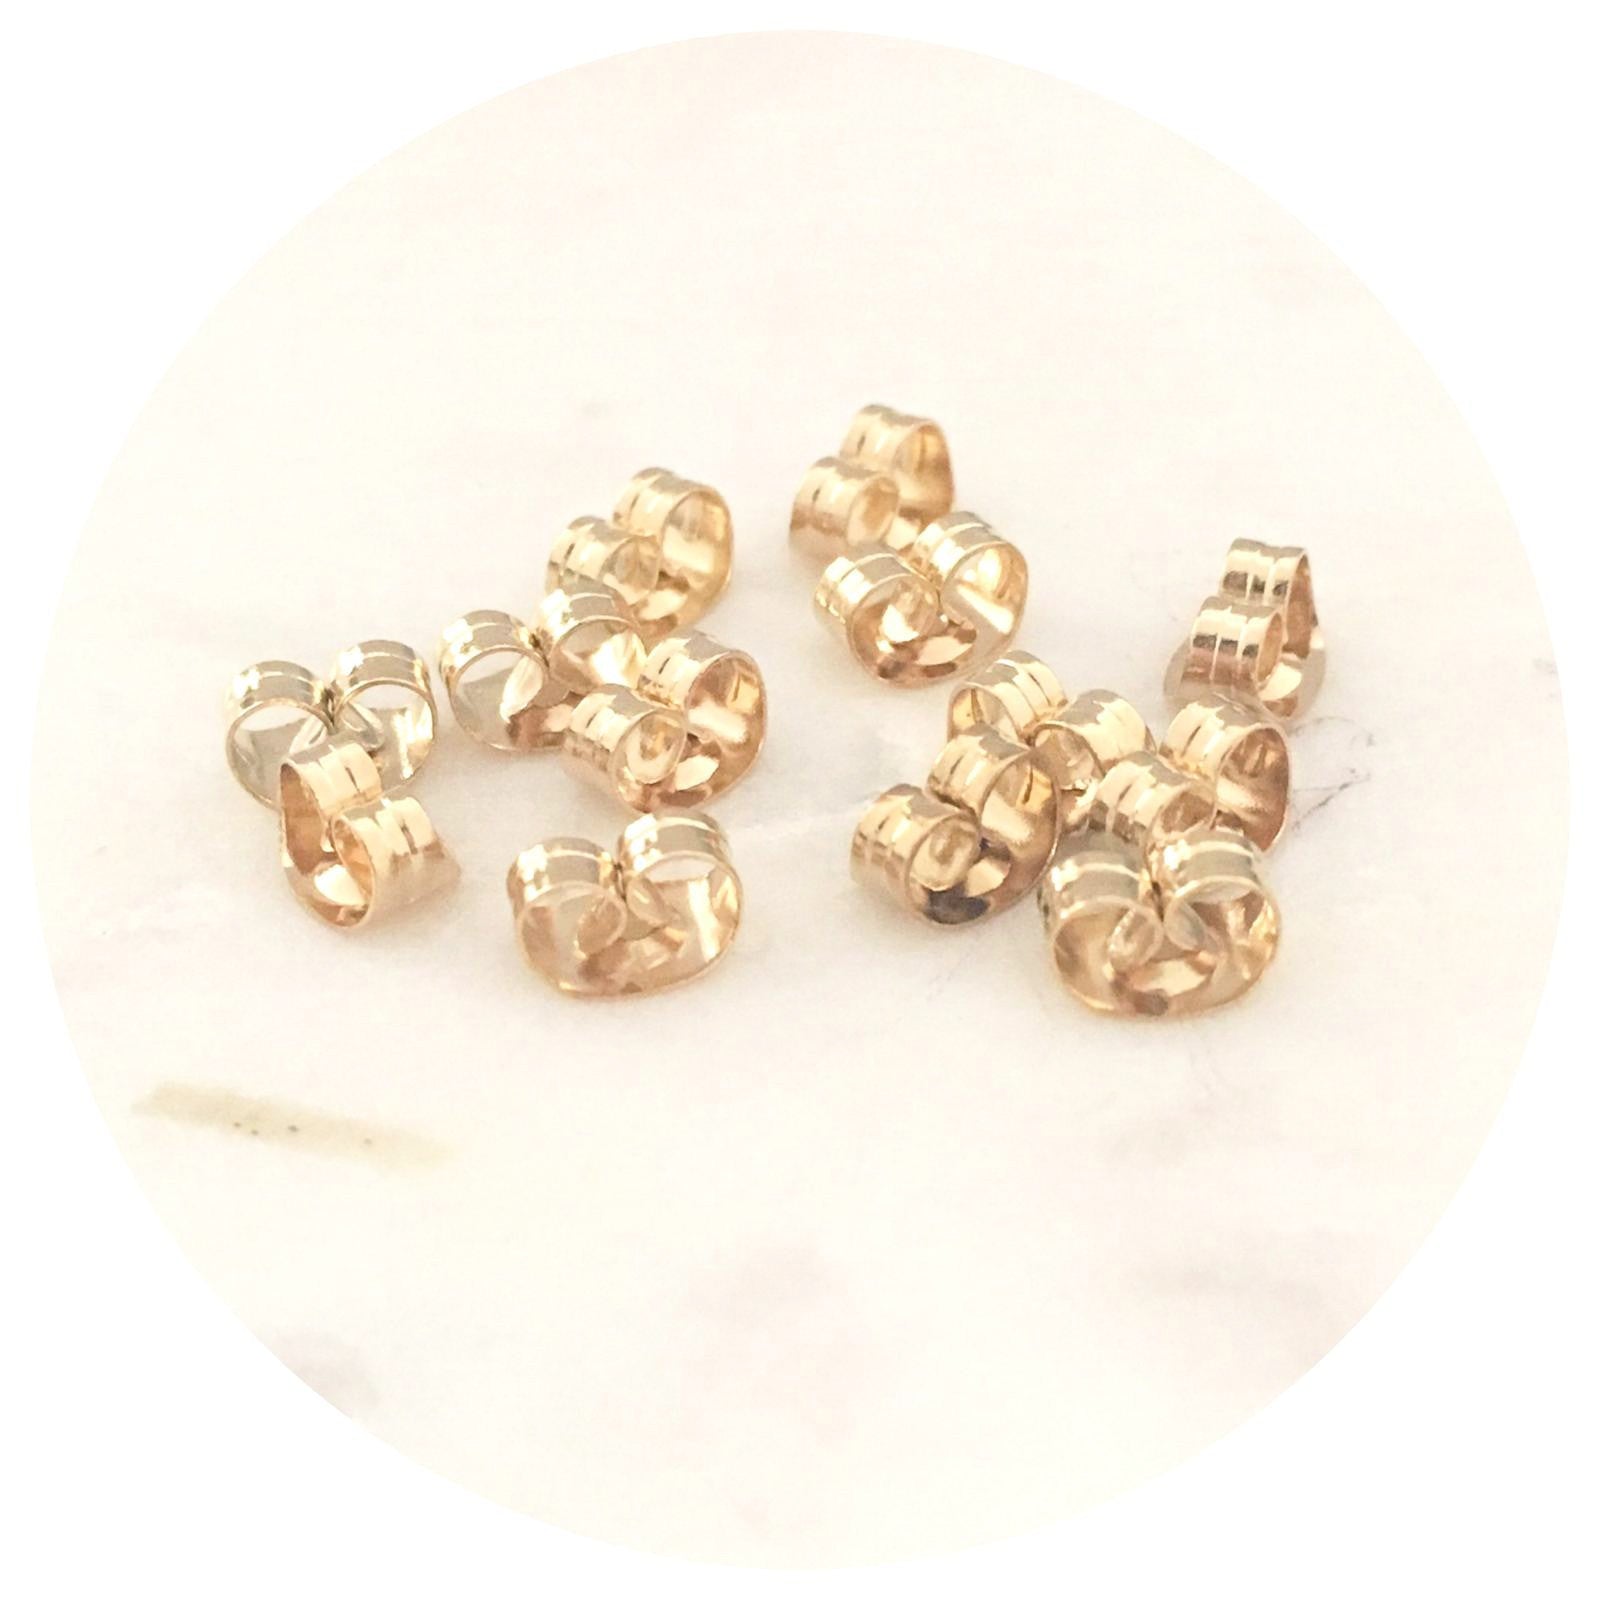 Gold Stainless Steel Earring Posts Butterfly Backs Ear Nuts - 100 pcs